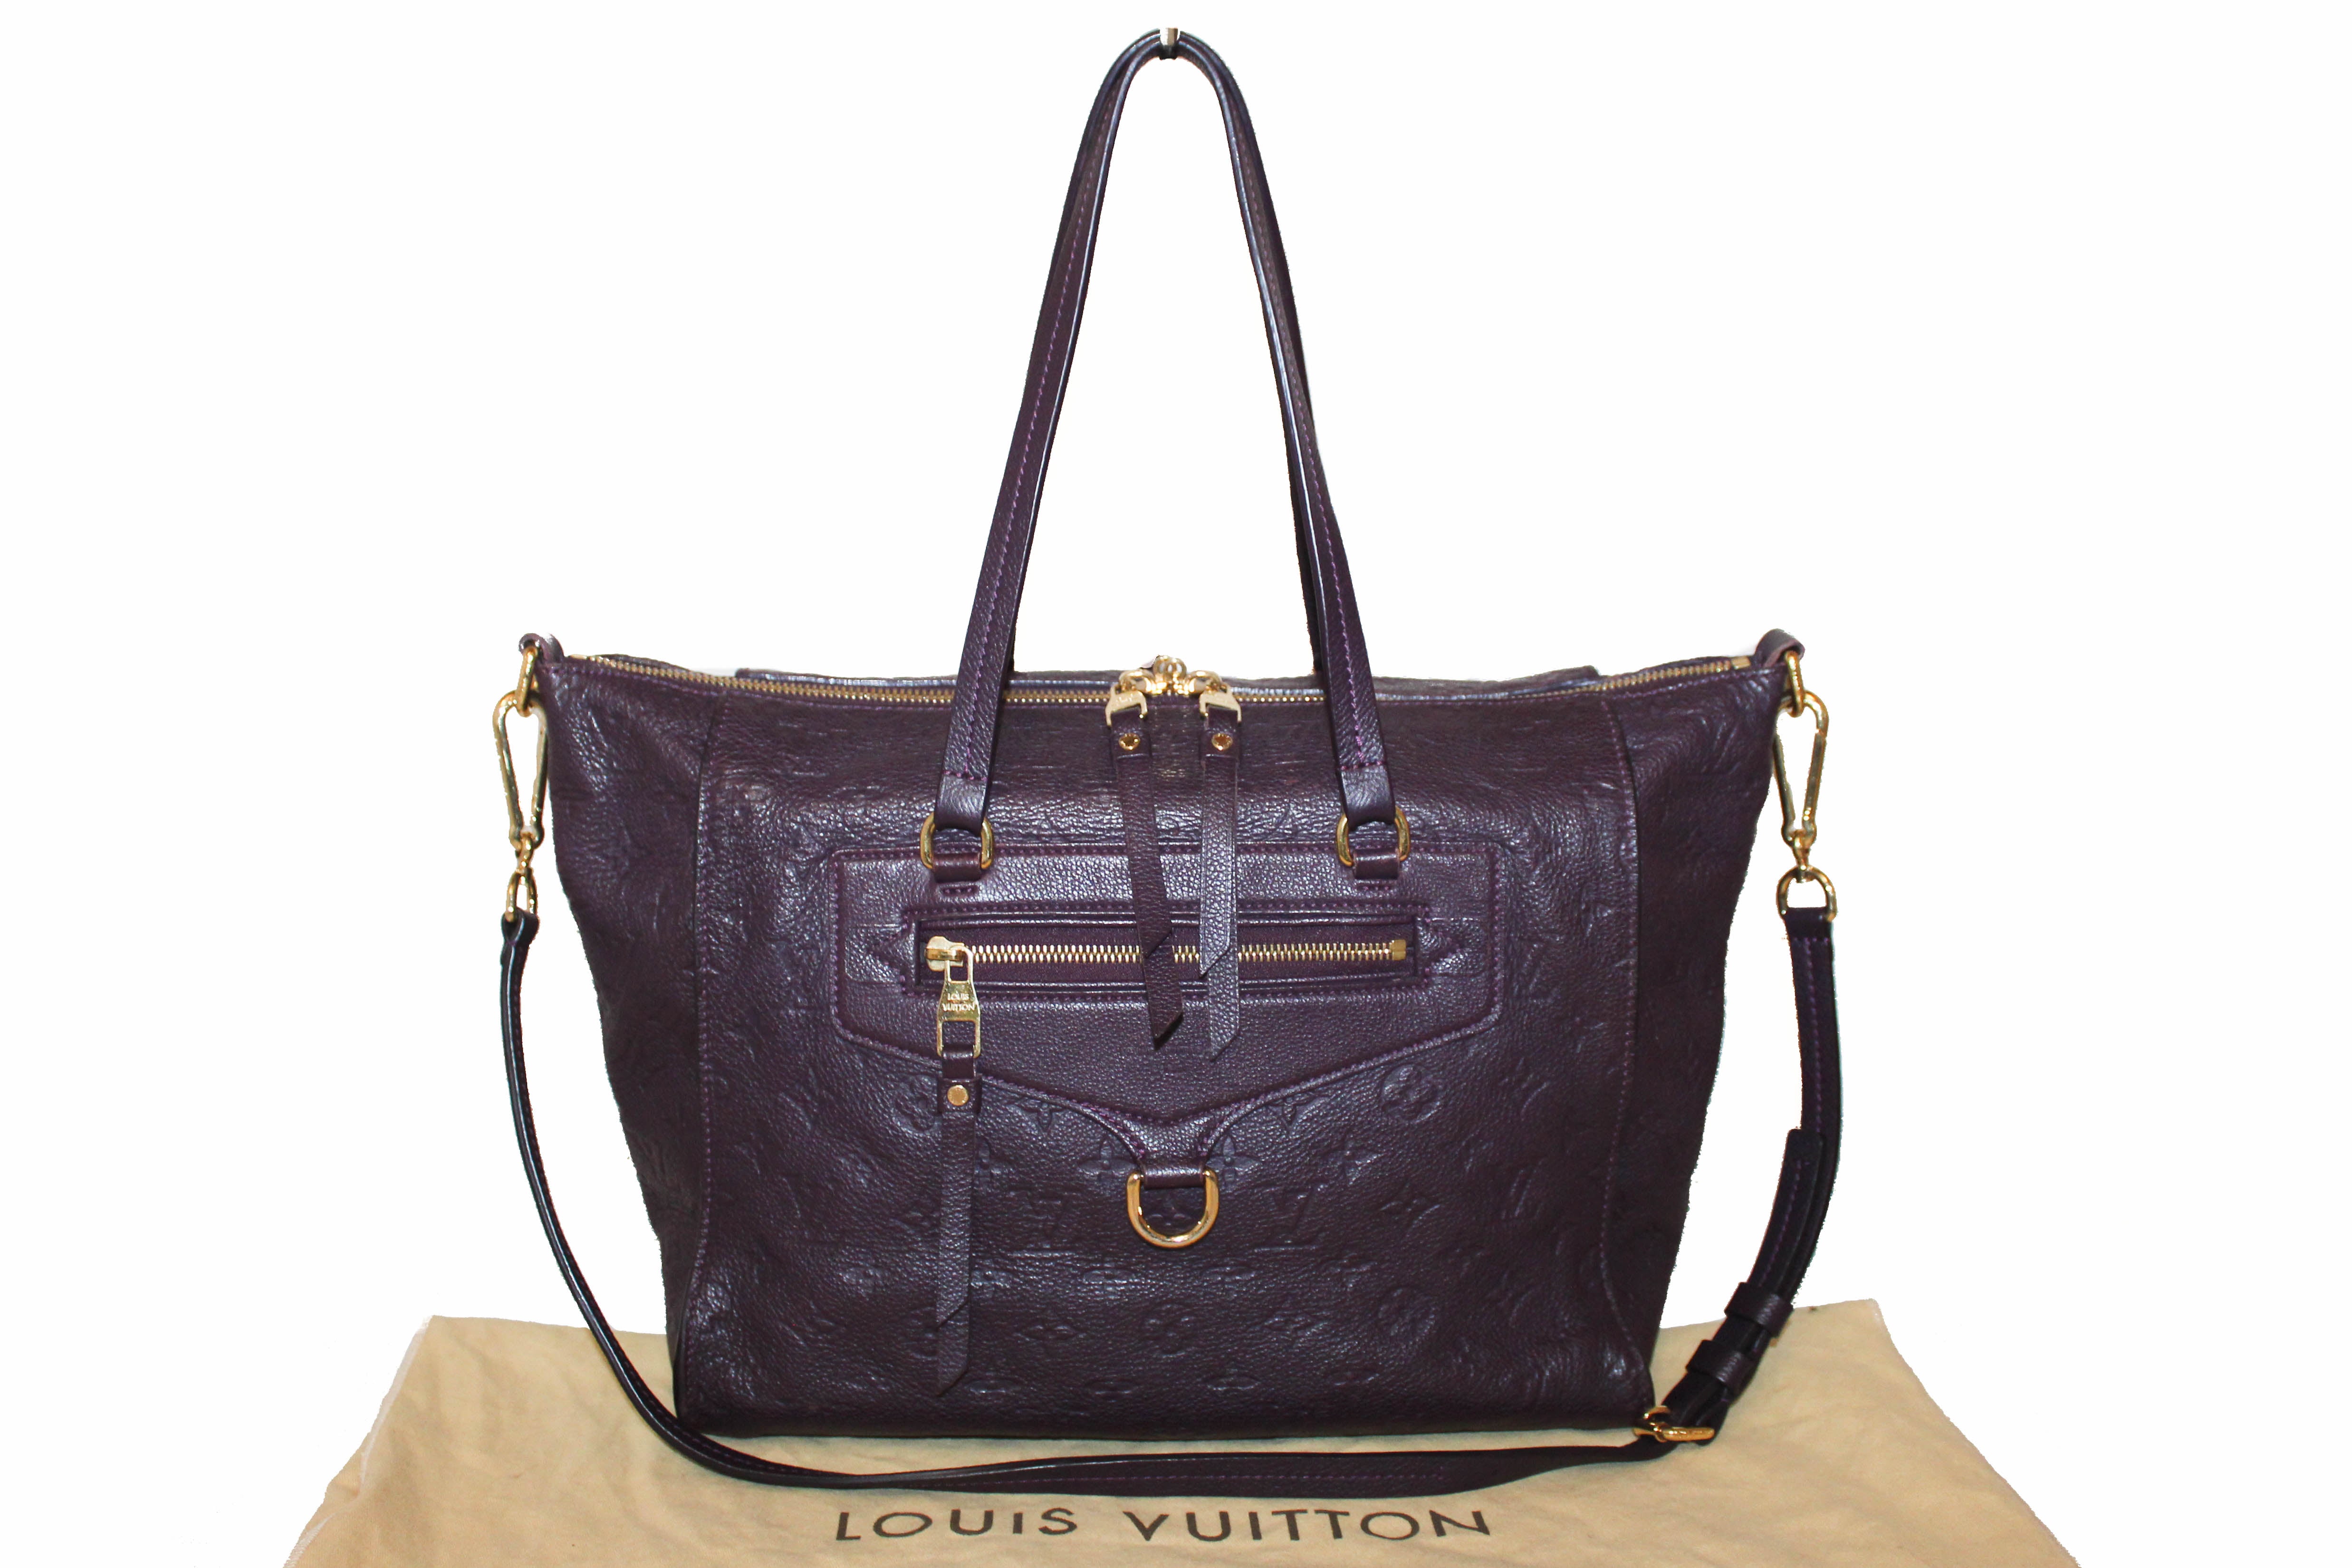 Louis Vuitton - Authentic Louis Vuitton Lumineuse Handbag Monogram